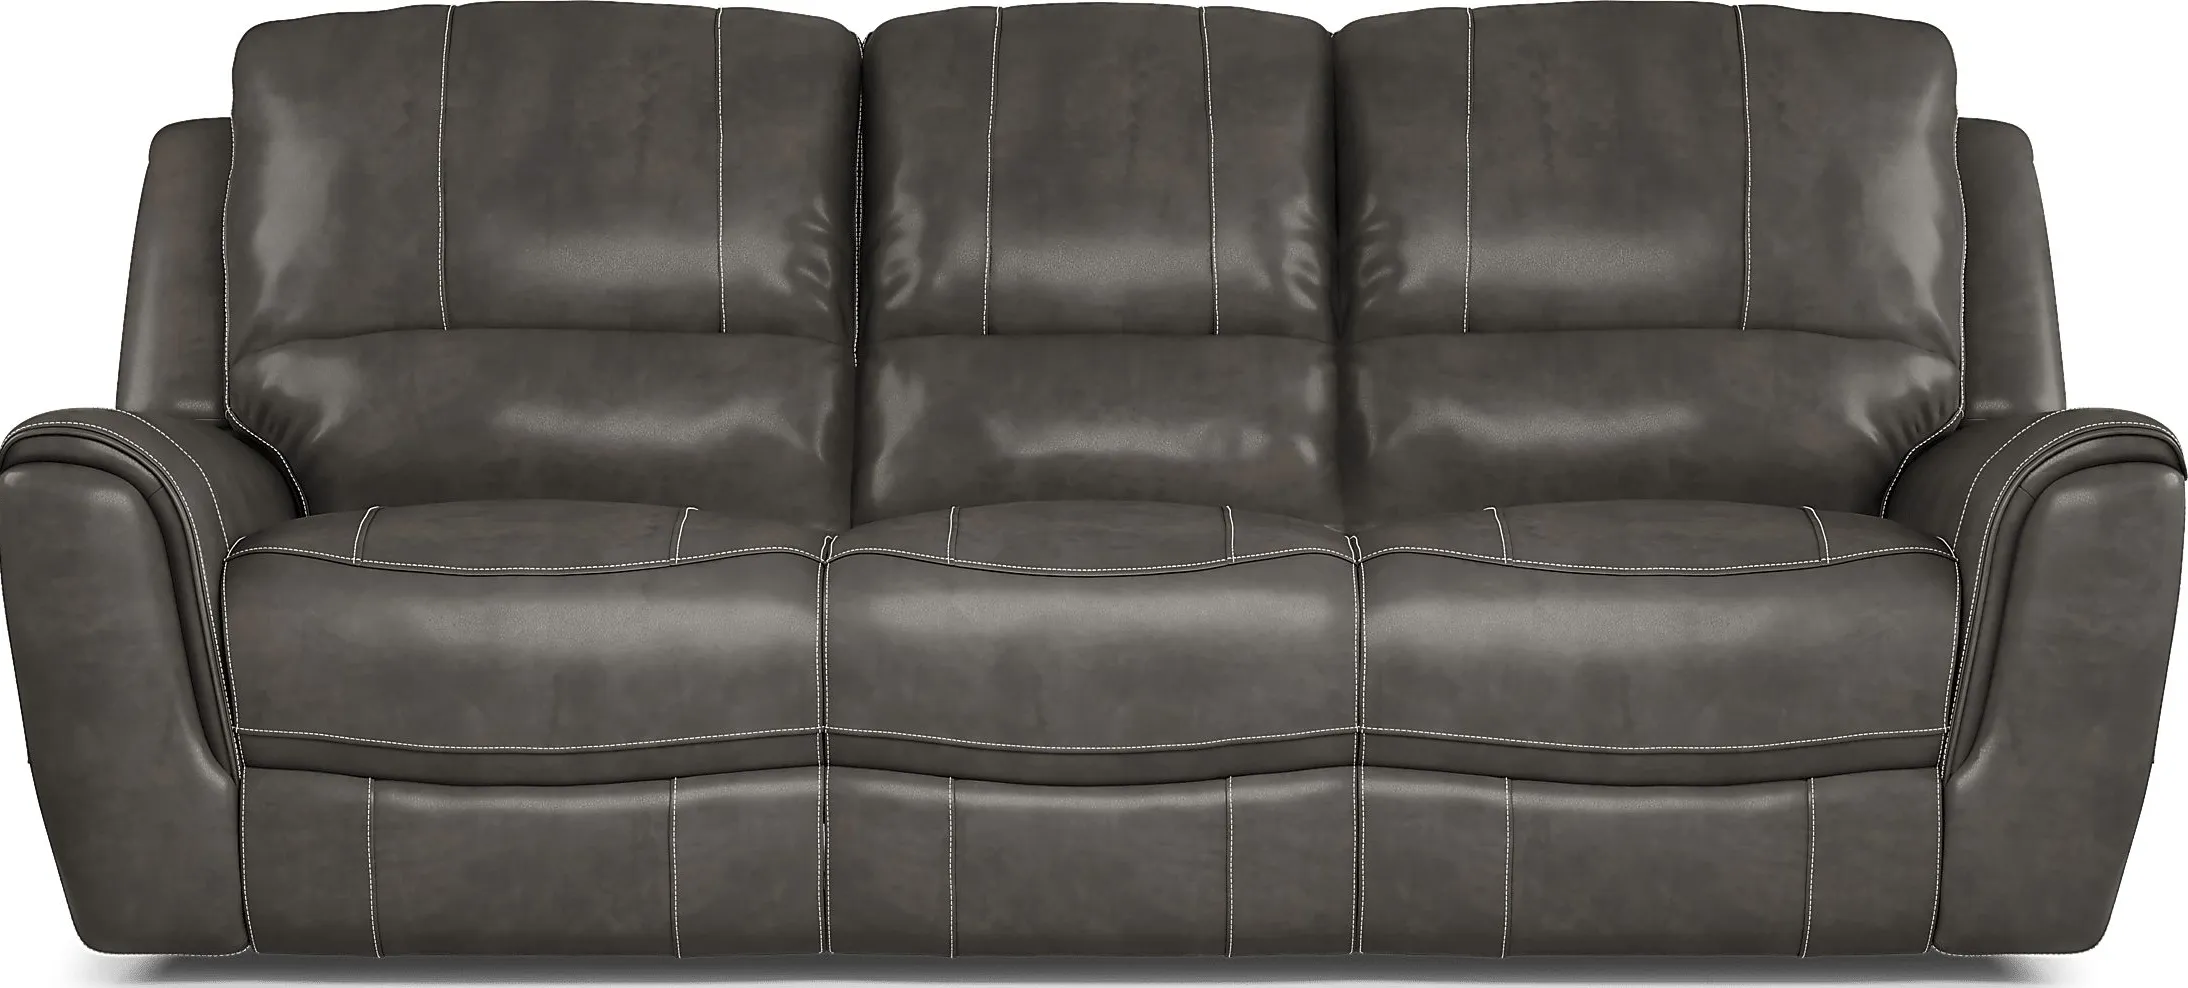 Lanzo Gray Leather Dual Power Reclining Sofa